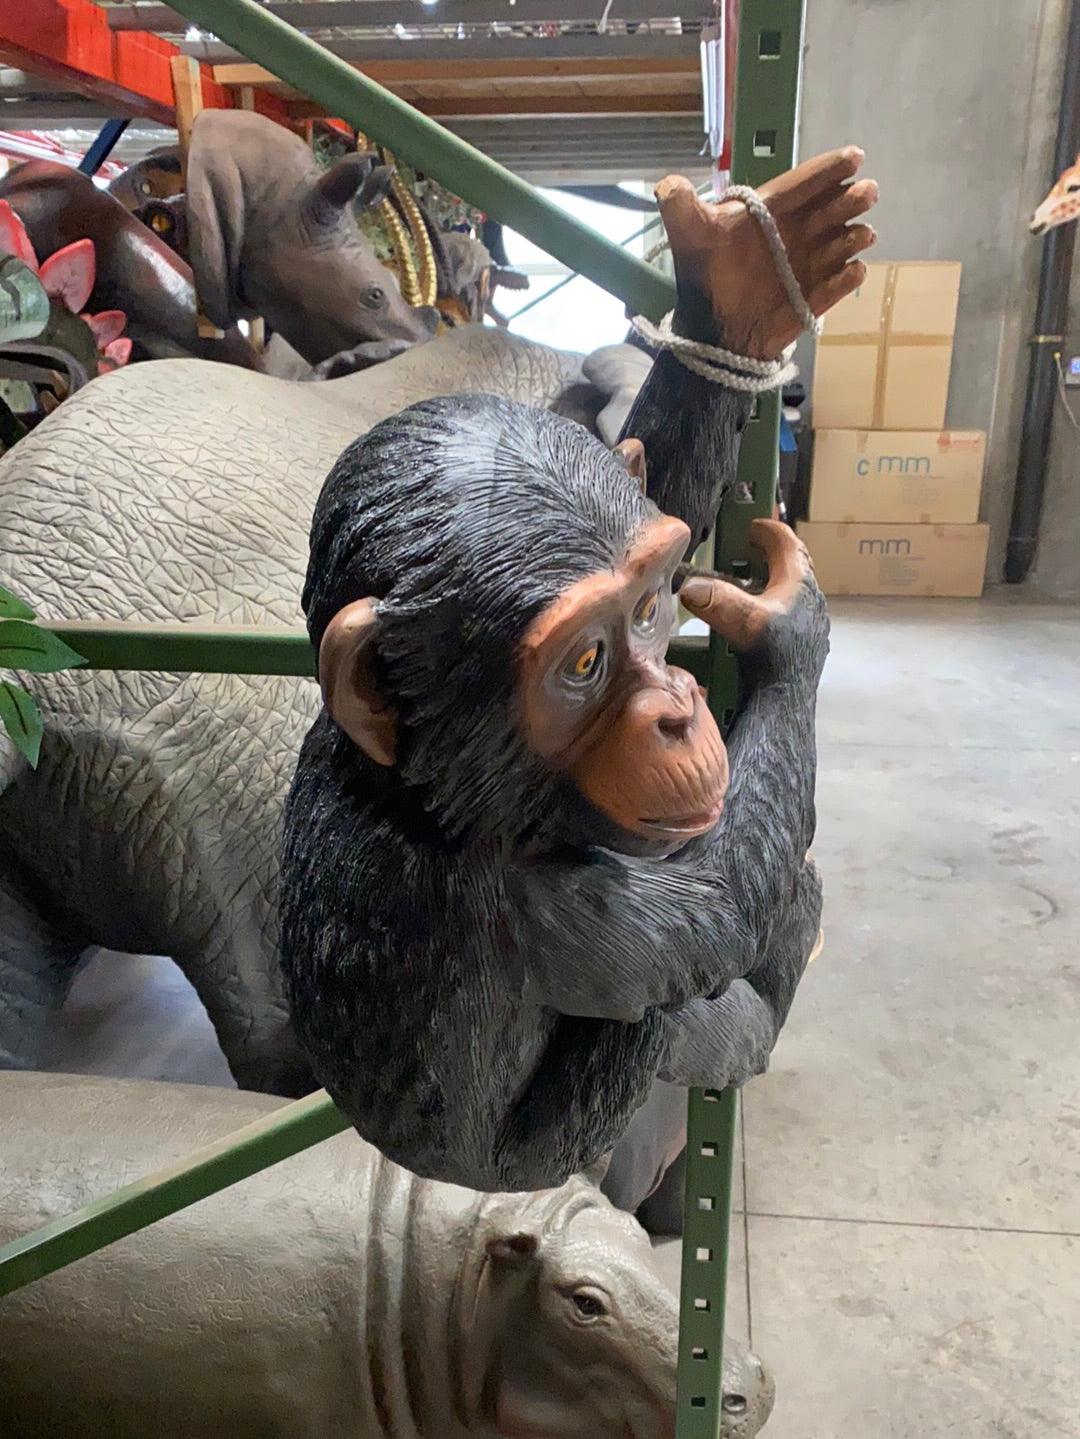 Monkey Congo Statue - LM Treasures Prop Rentals 